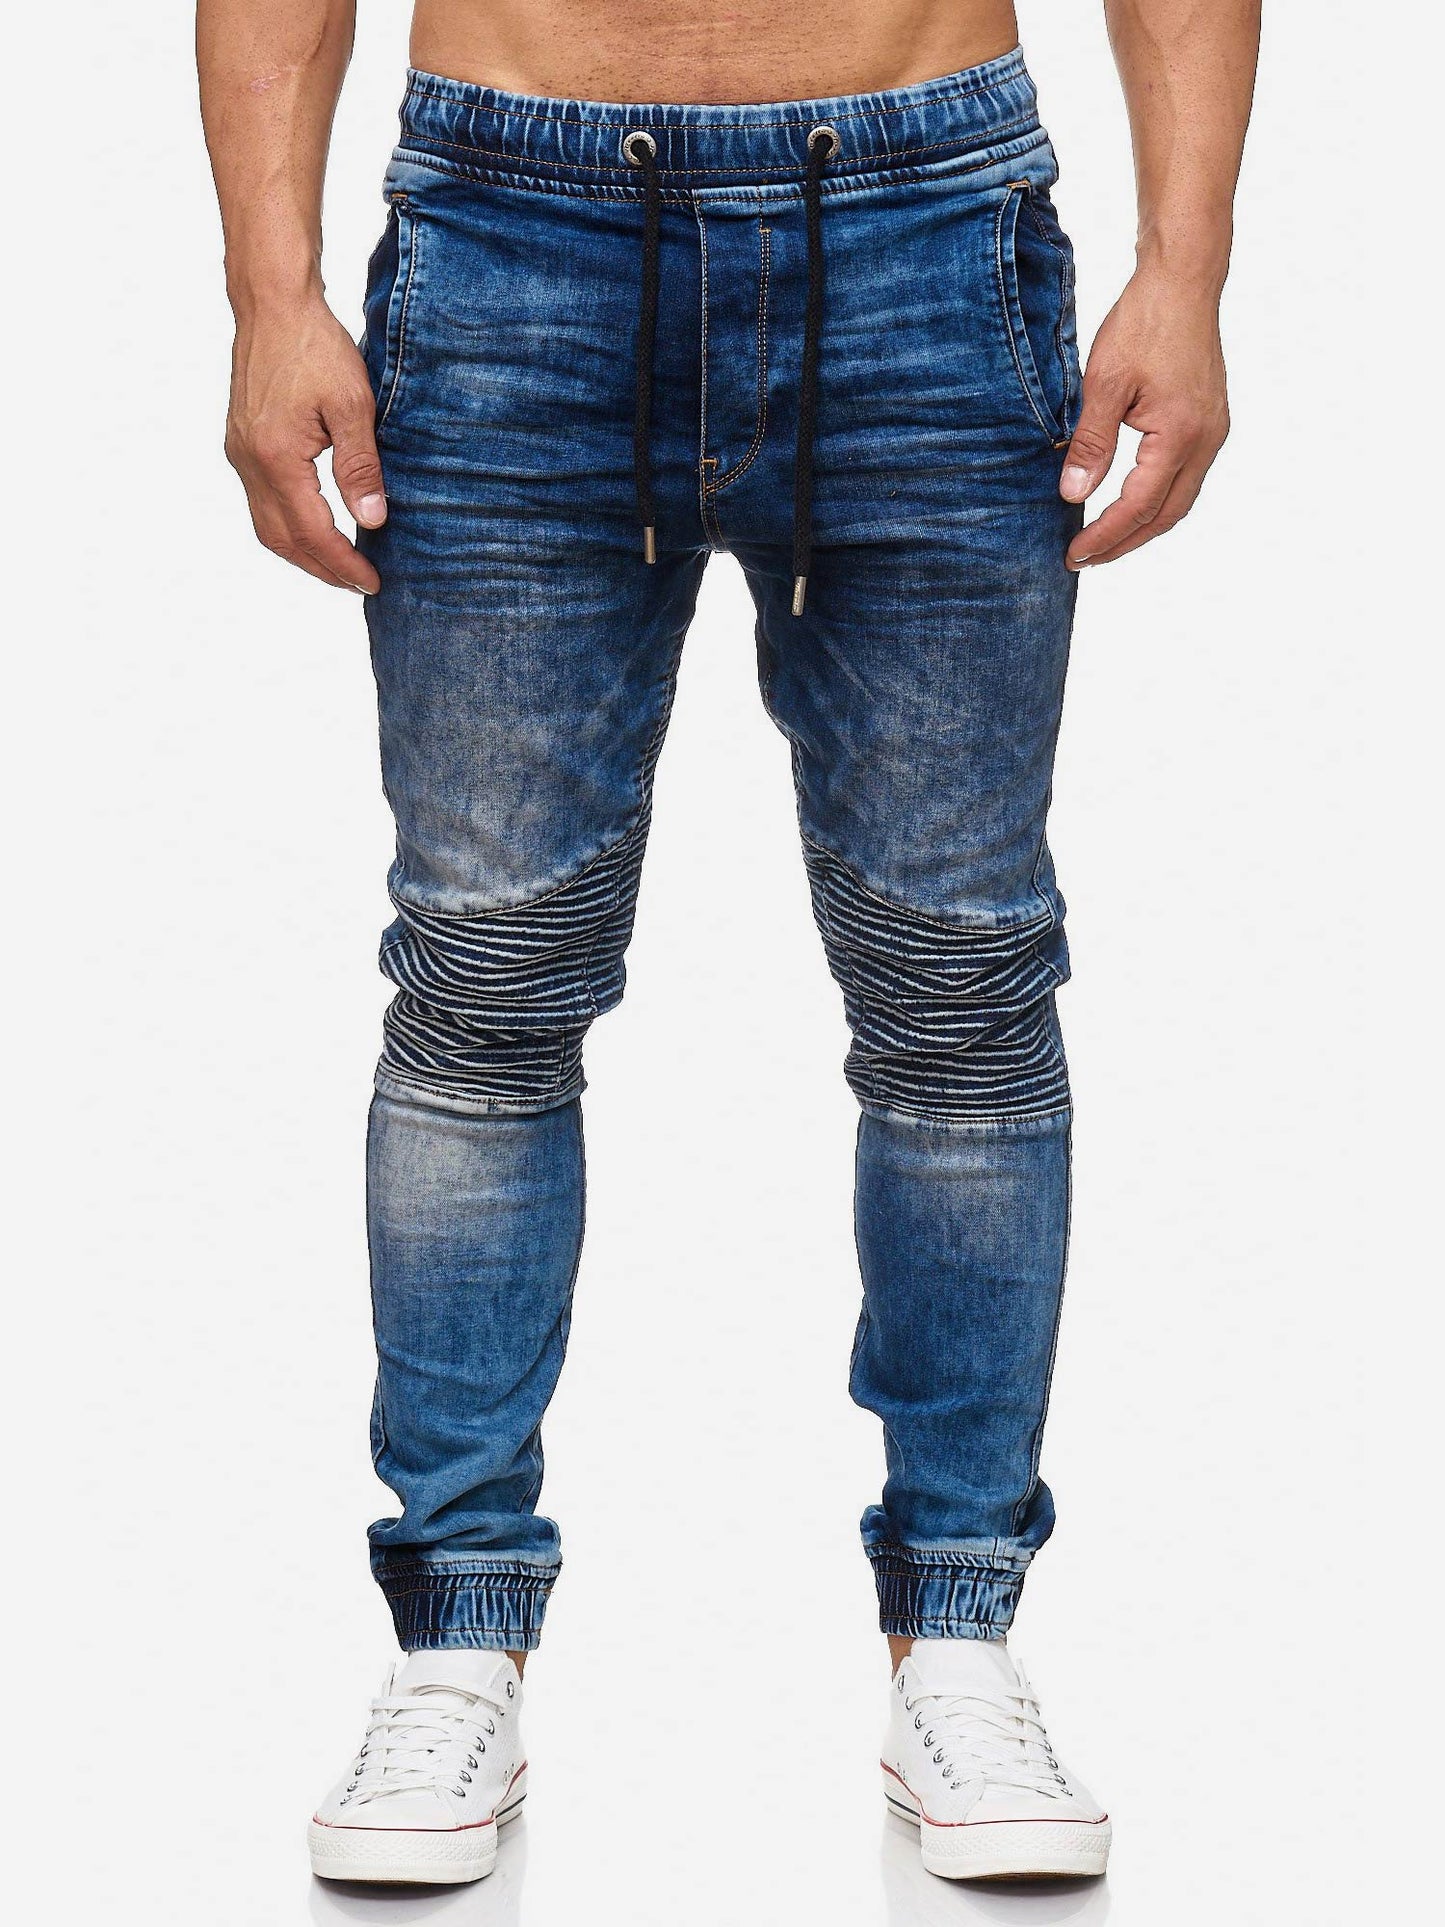 Tazzio Herren Jeans Regular Fit im Biker Jogger-Stil 16505